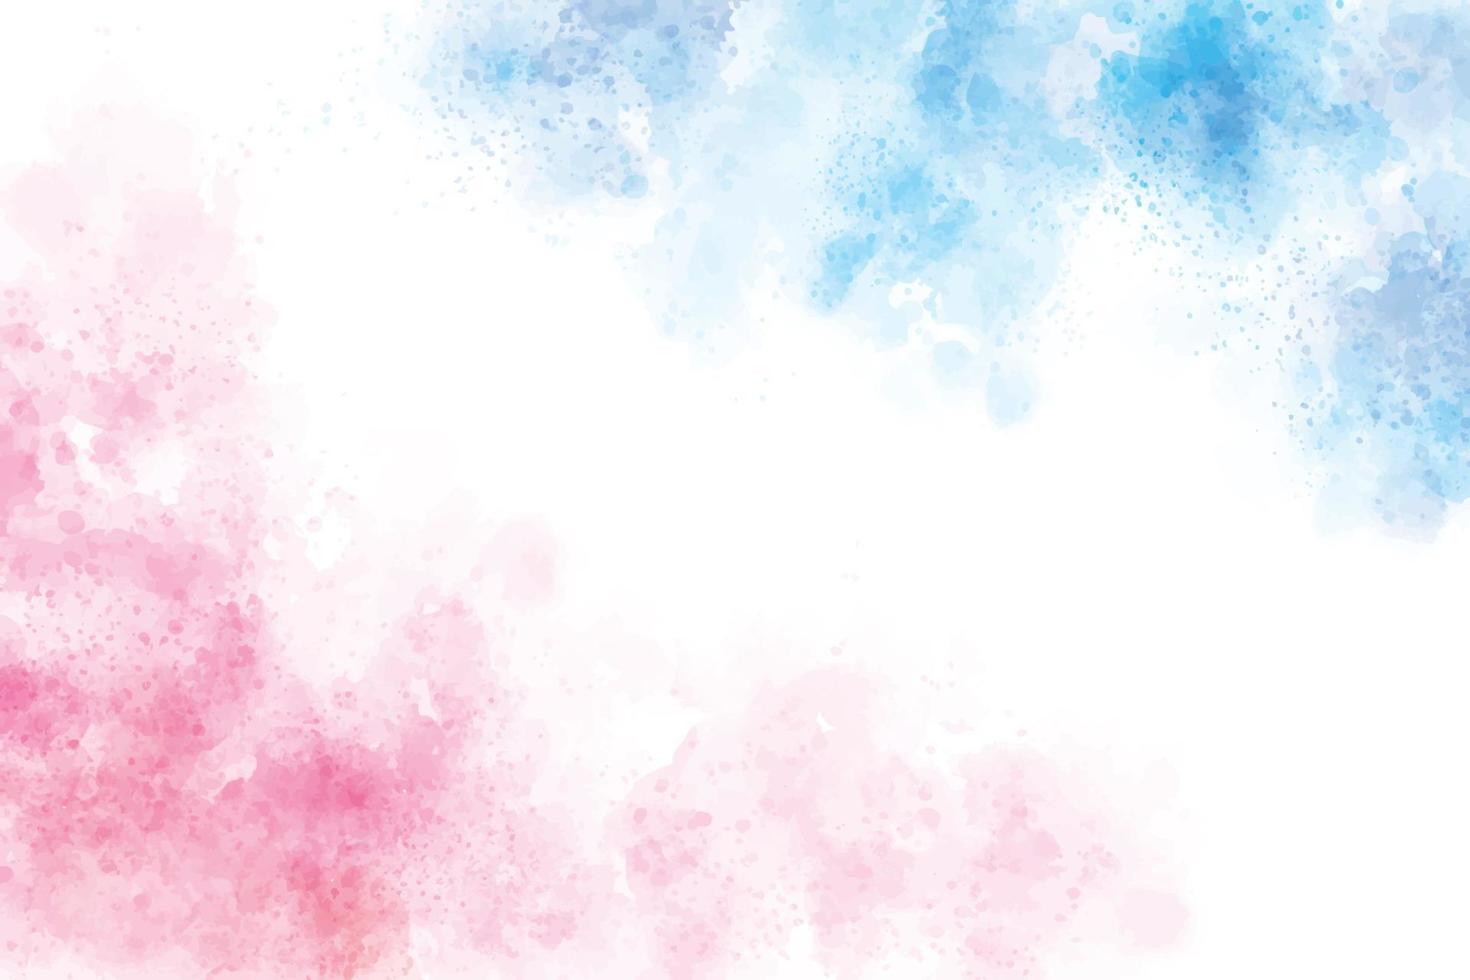 2 tones blue and pink watercolor wash splash background vector